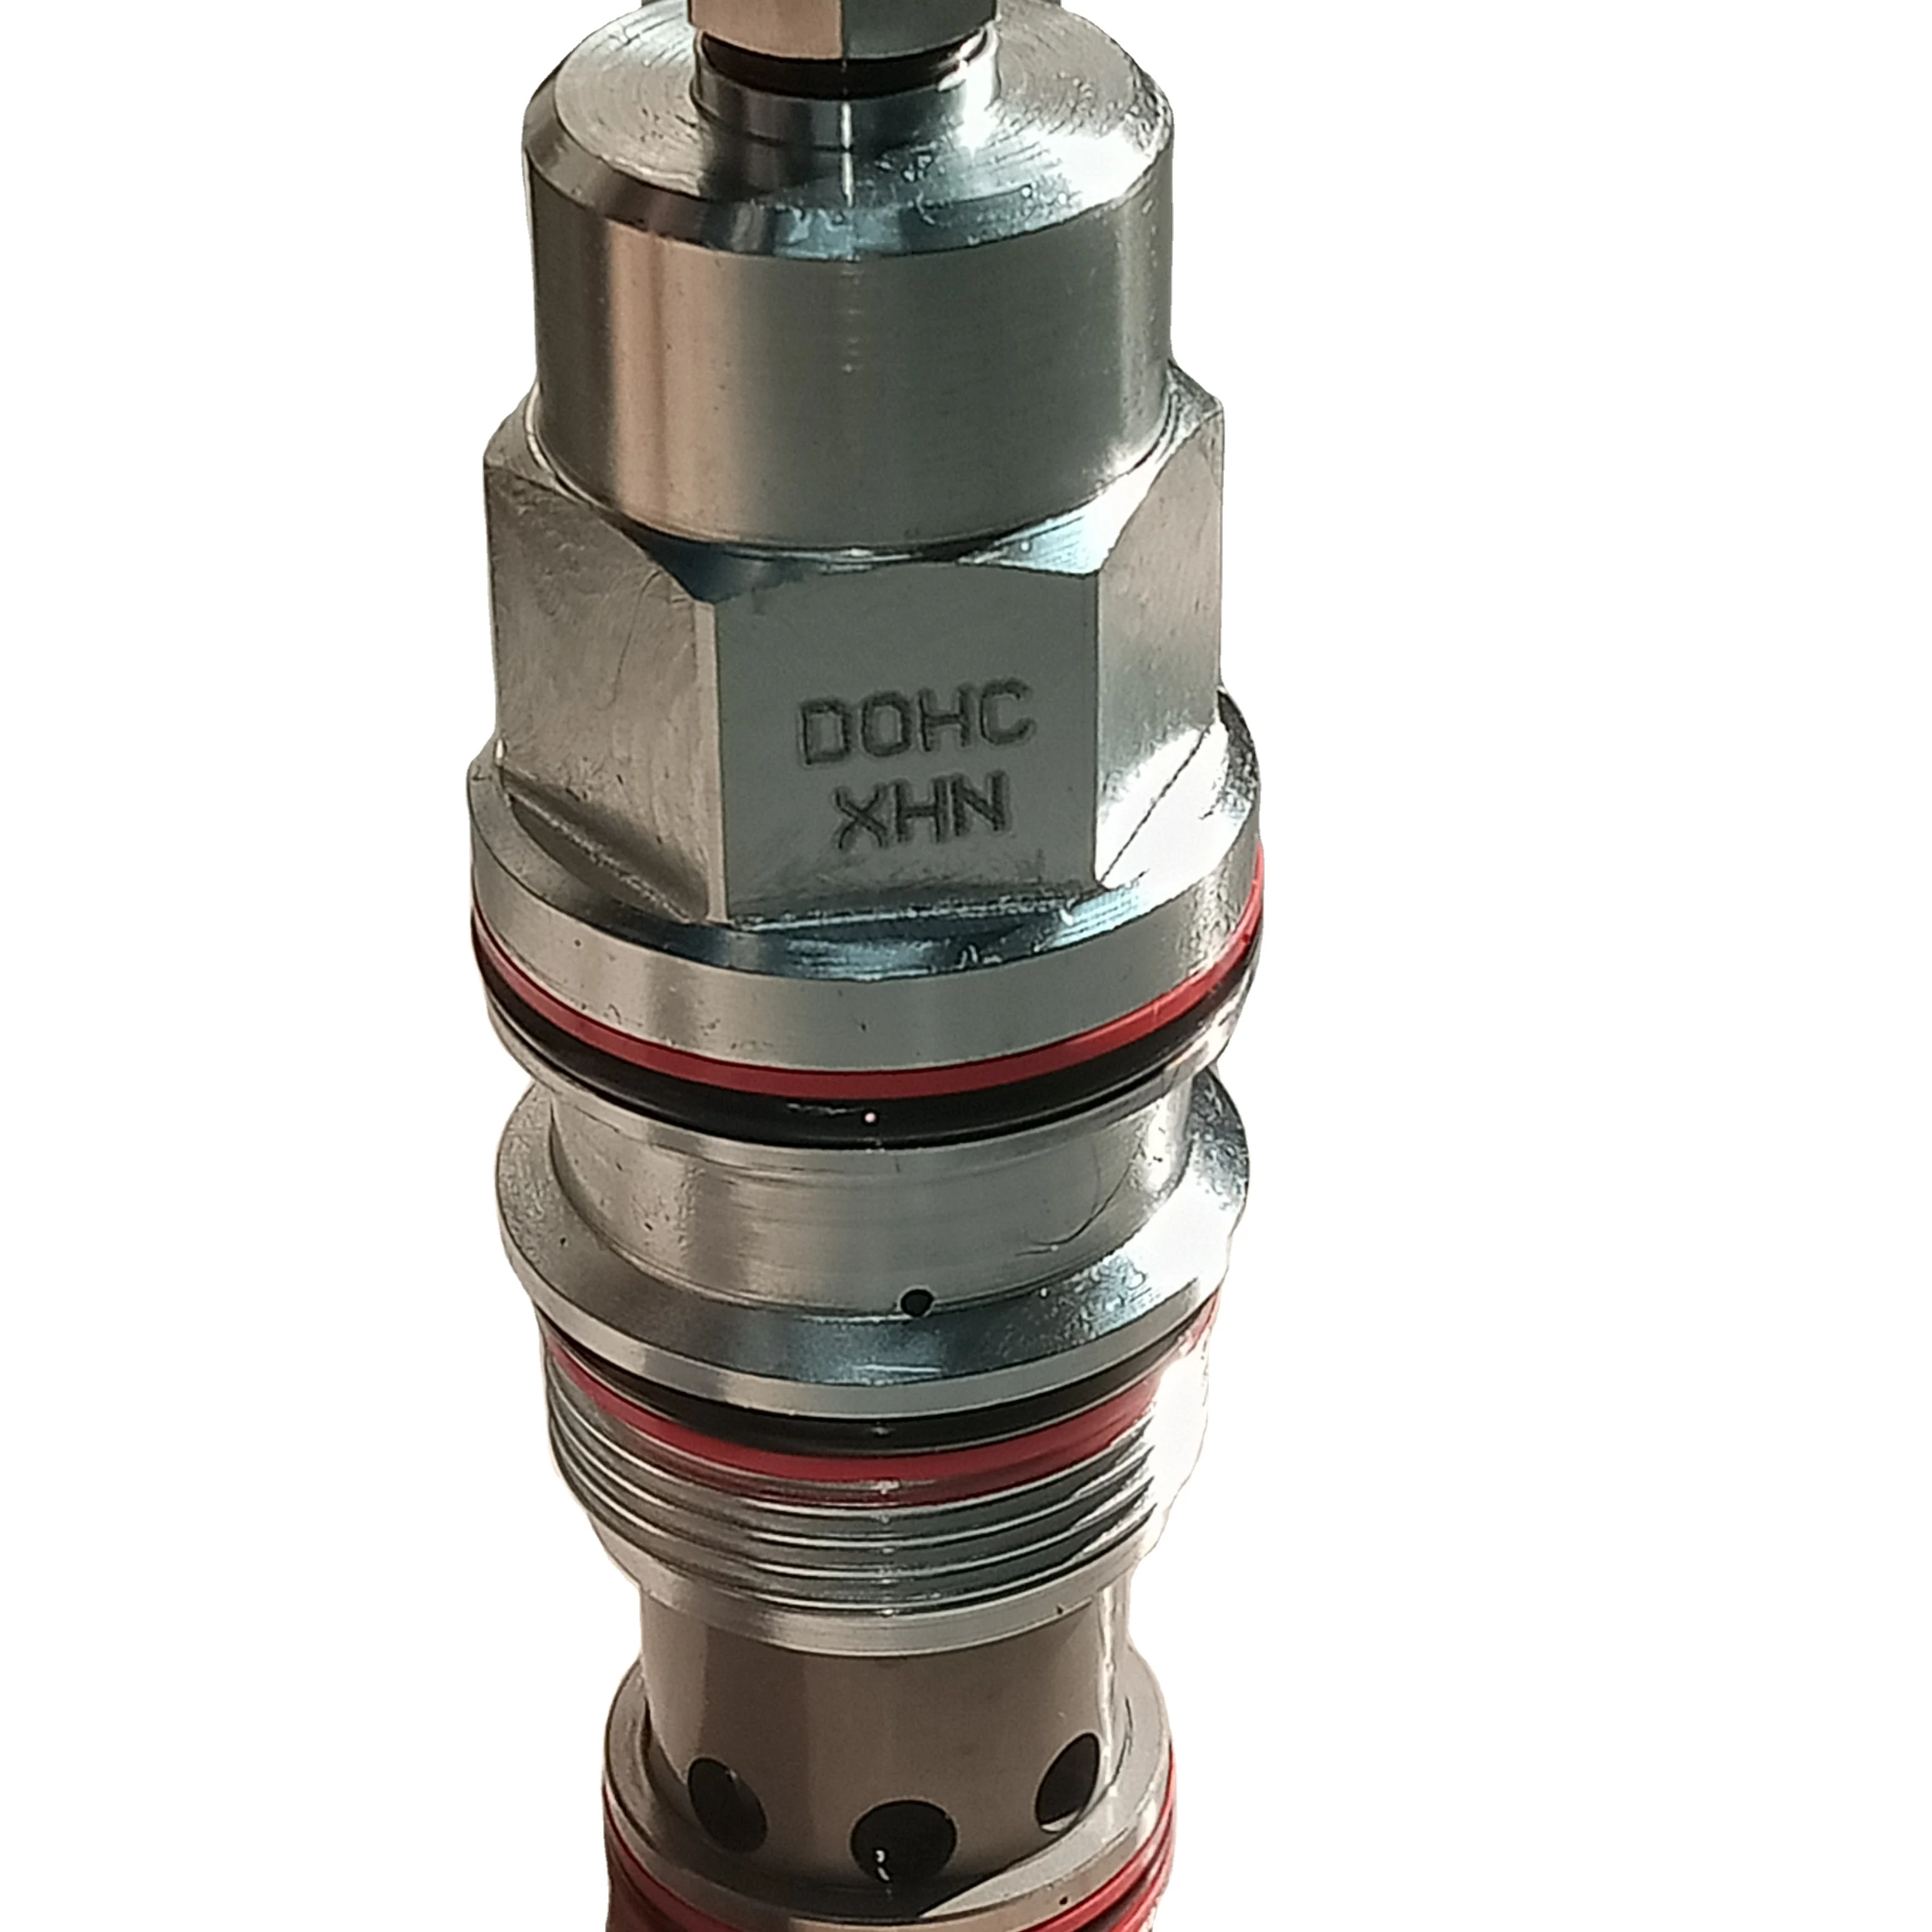 

DOHC-XHN DOHCXHN DOHC XHN SUN HYDRAULICS origin cartridge valve Normally open, balanced poppet, logic element - pilot-to-close